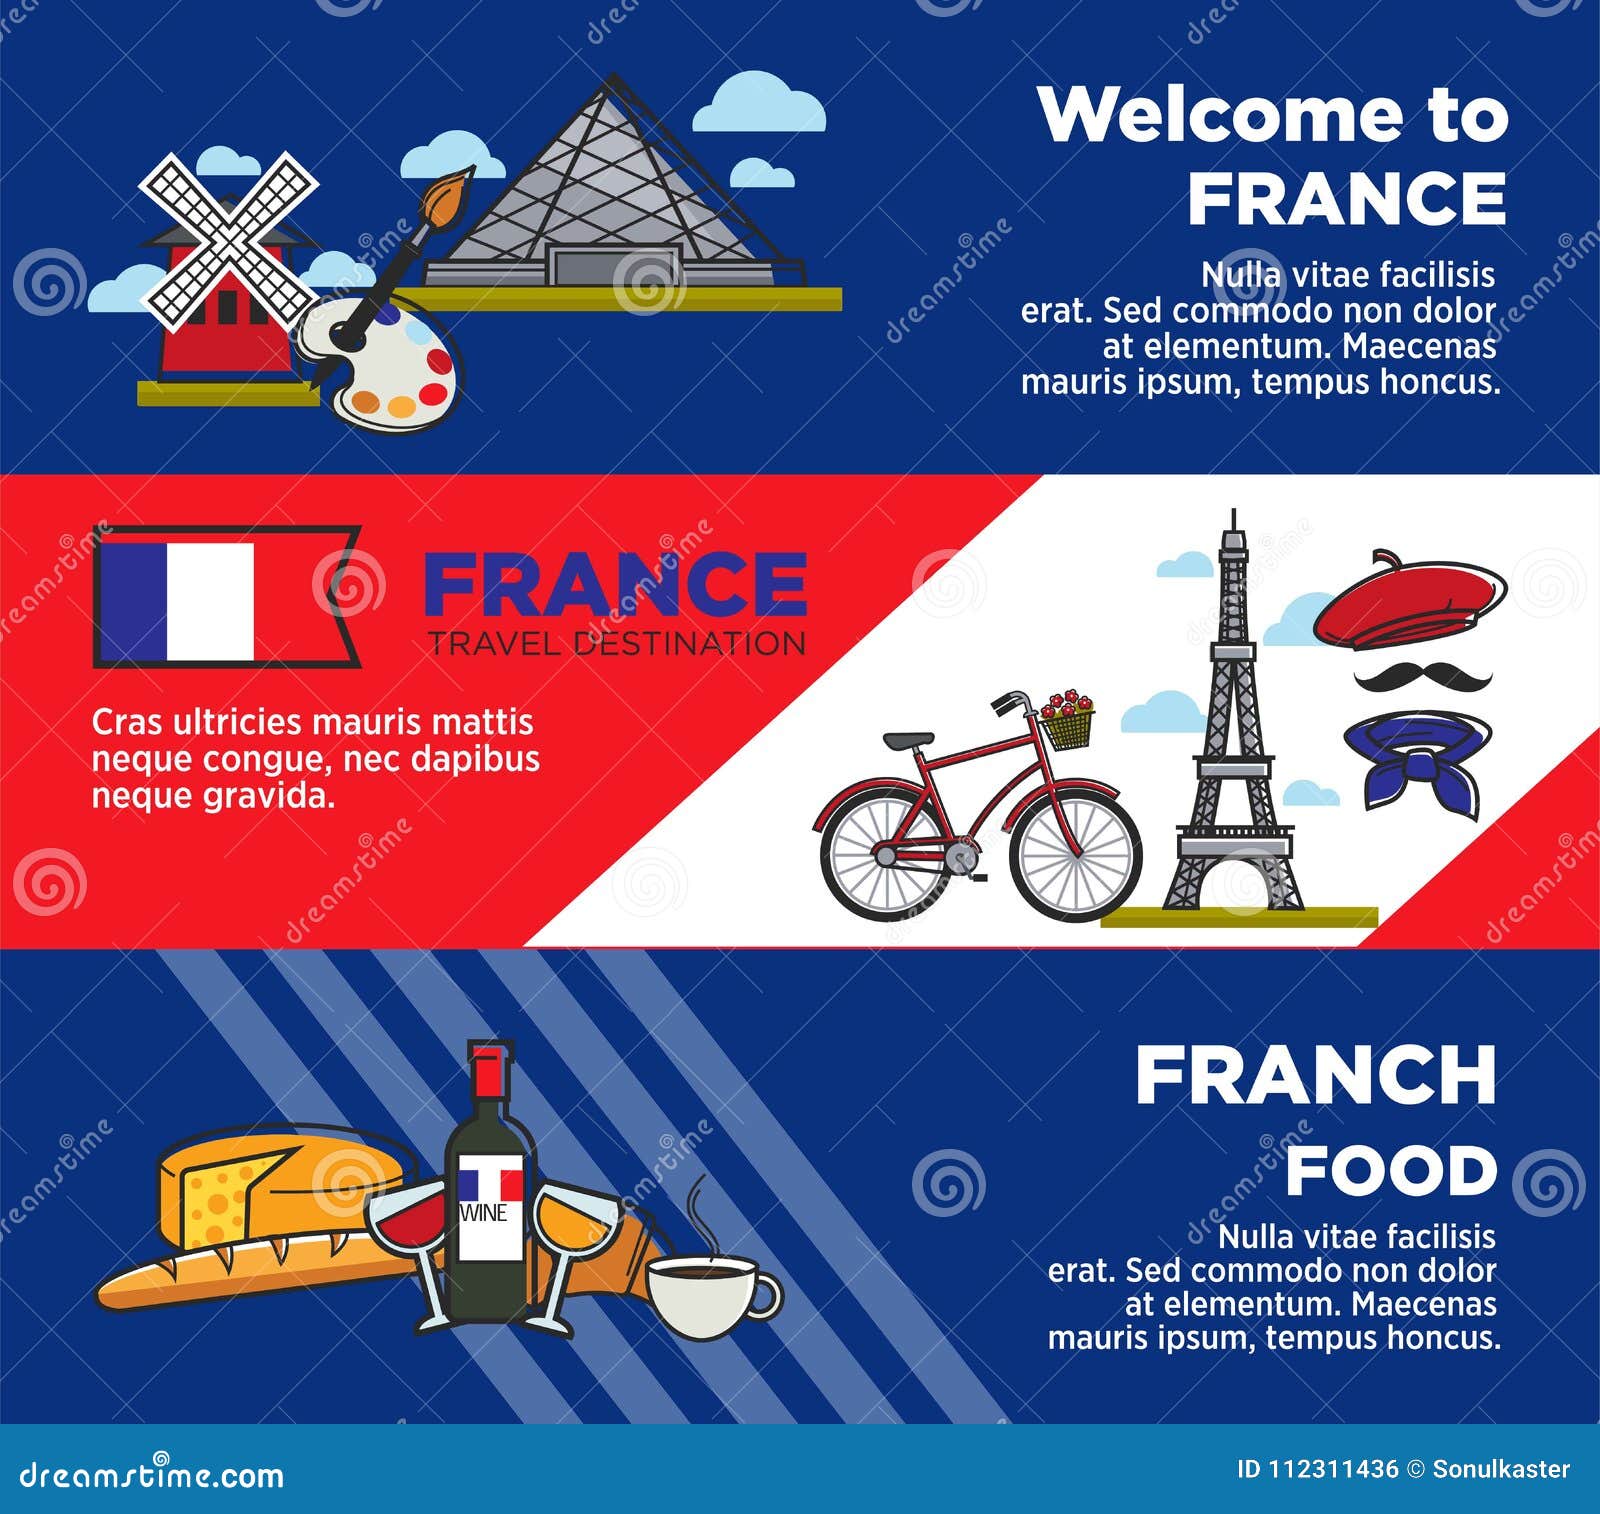 france tourism ad